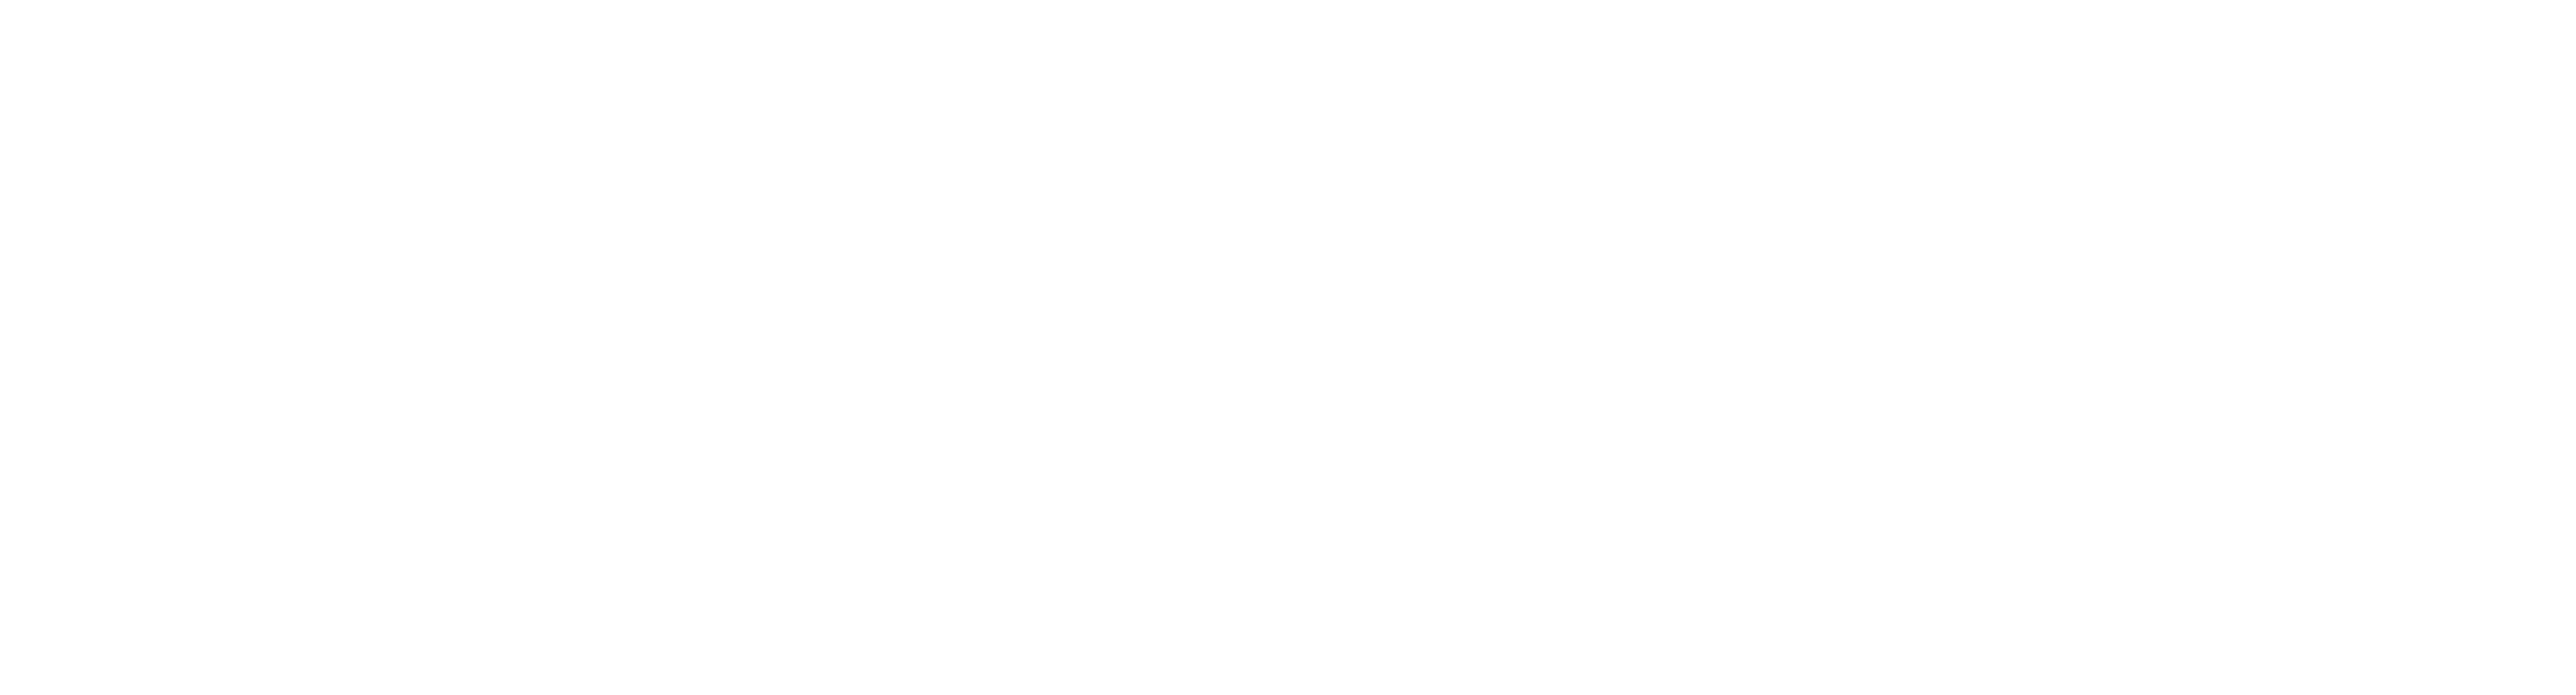 Ohio University logo in white